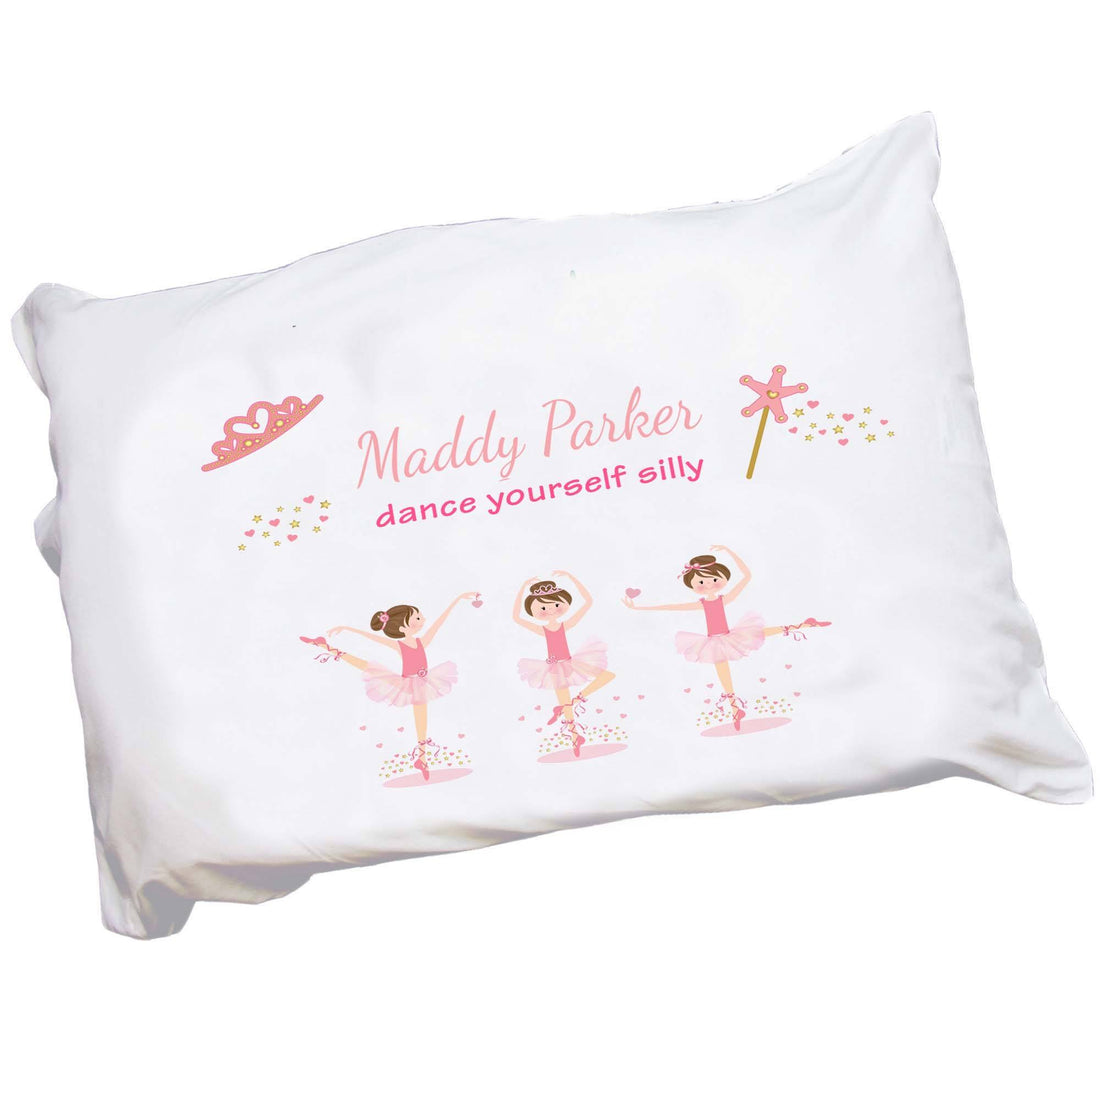 Personalized Childrens Pillowcase with Ballerina Brunette design